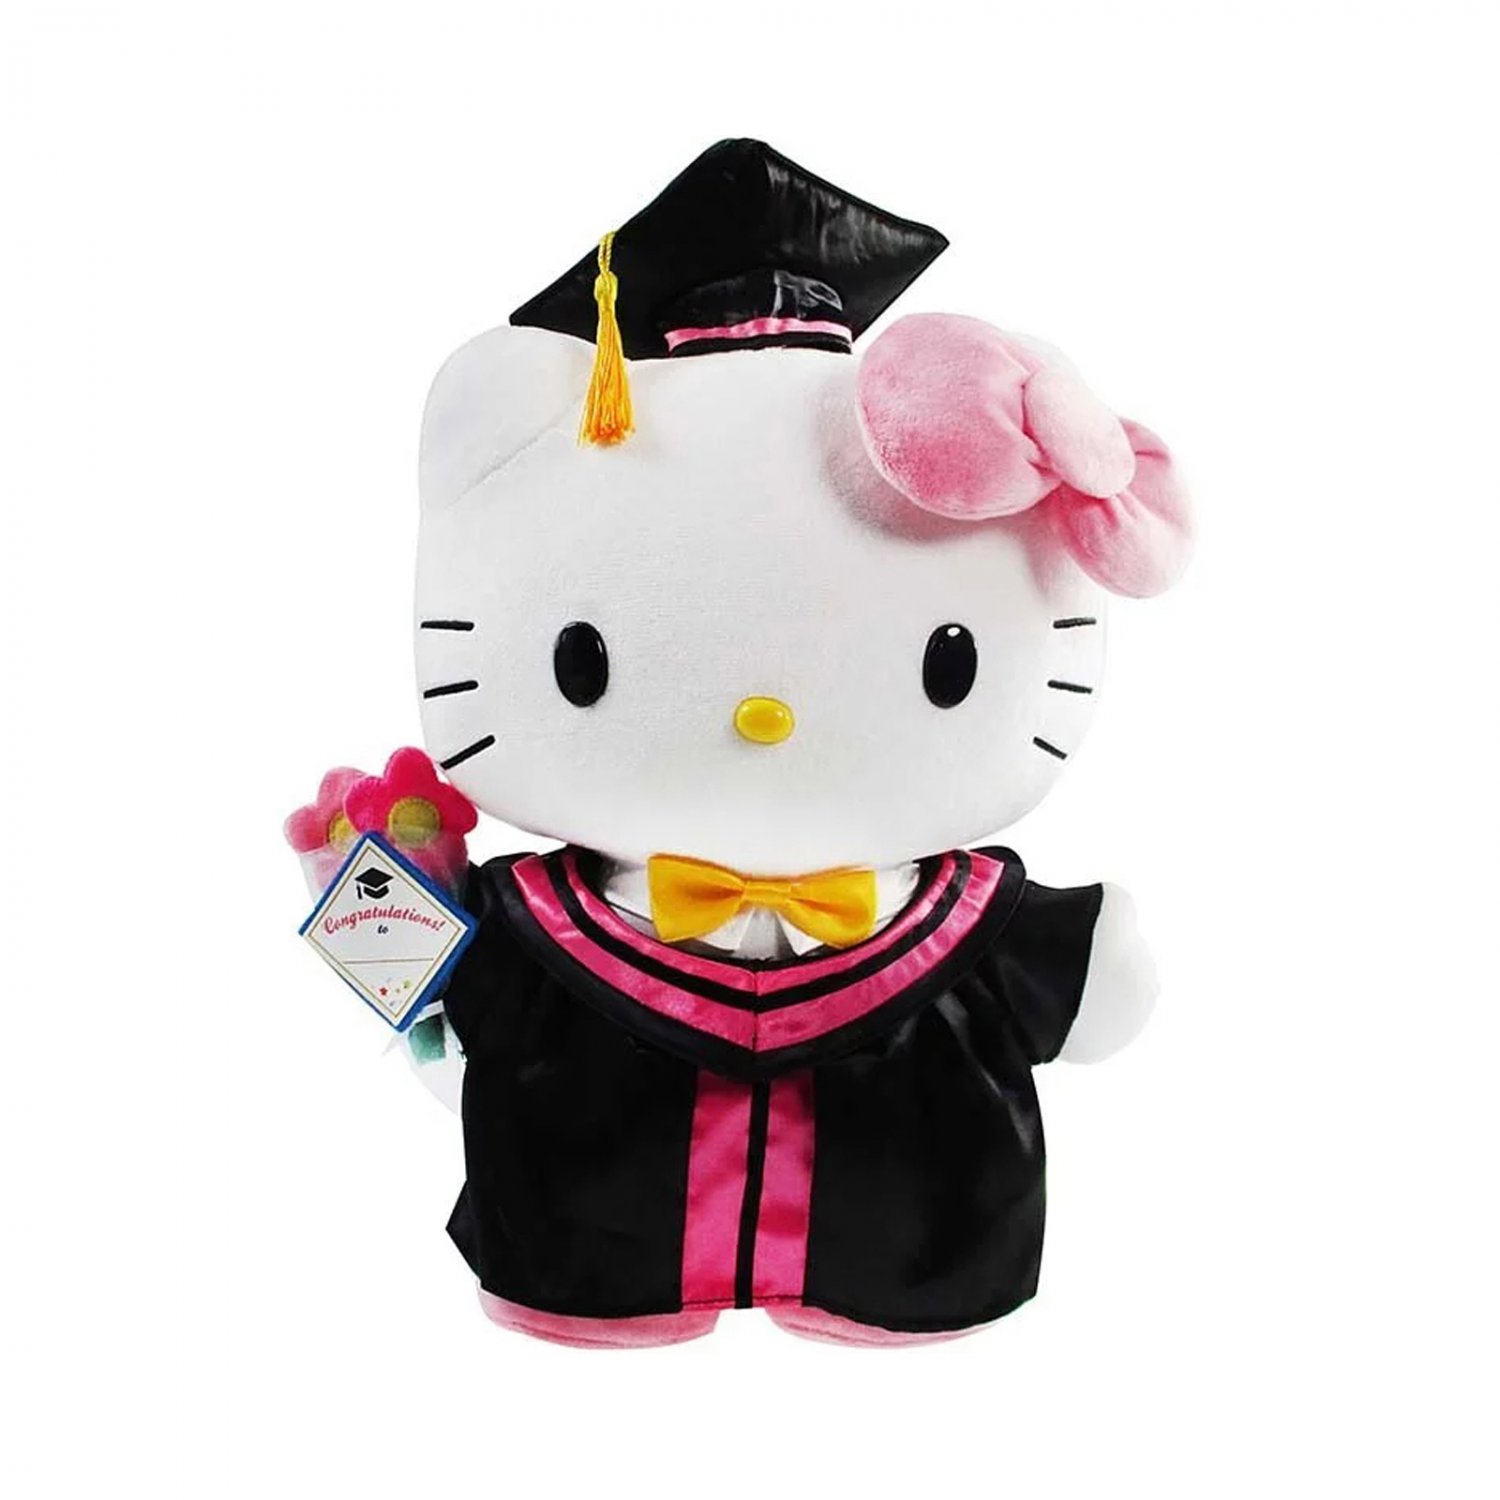 Sanrio Hello Kitty 12" Tall Plush Doll figure figurine Graduation school university gift girls PD19